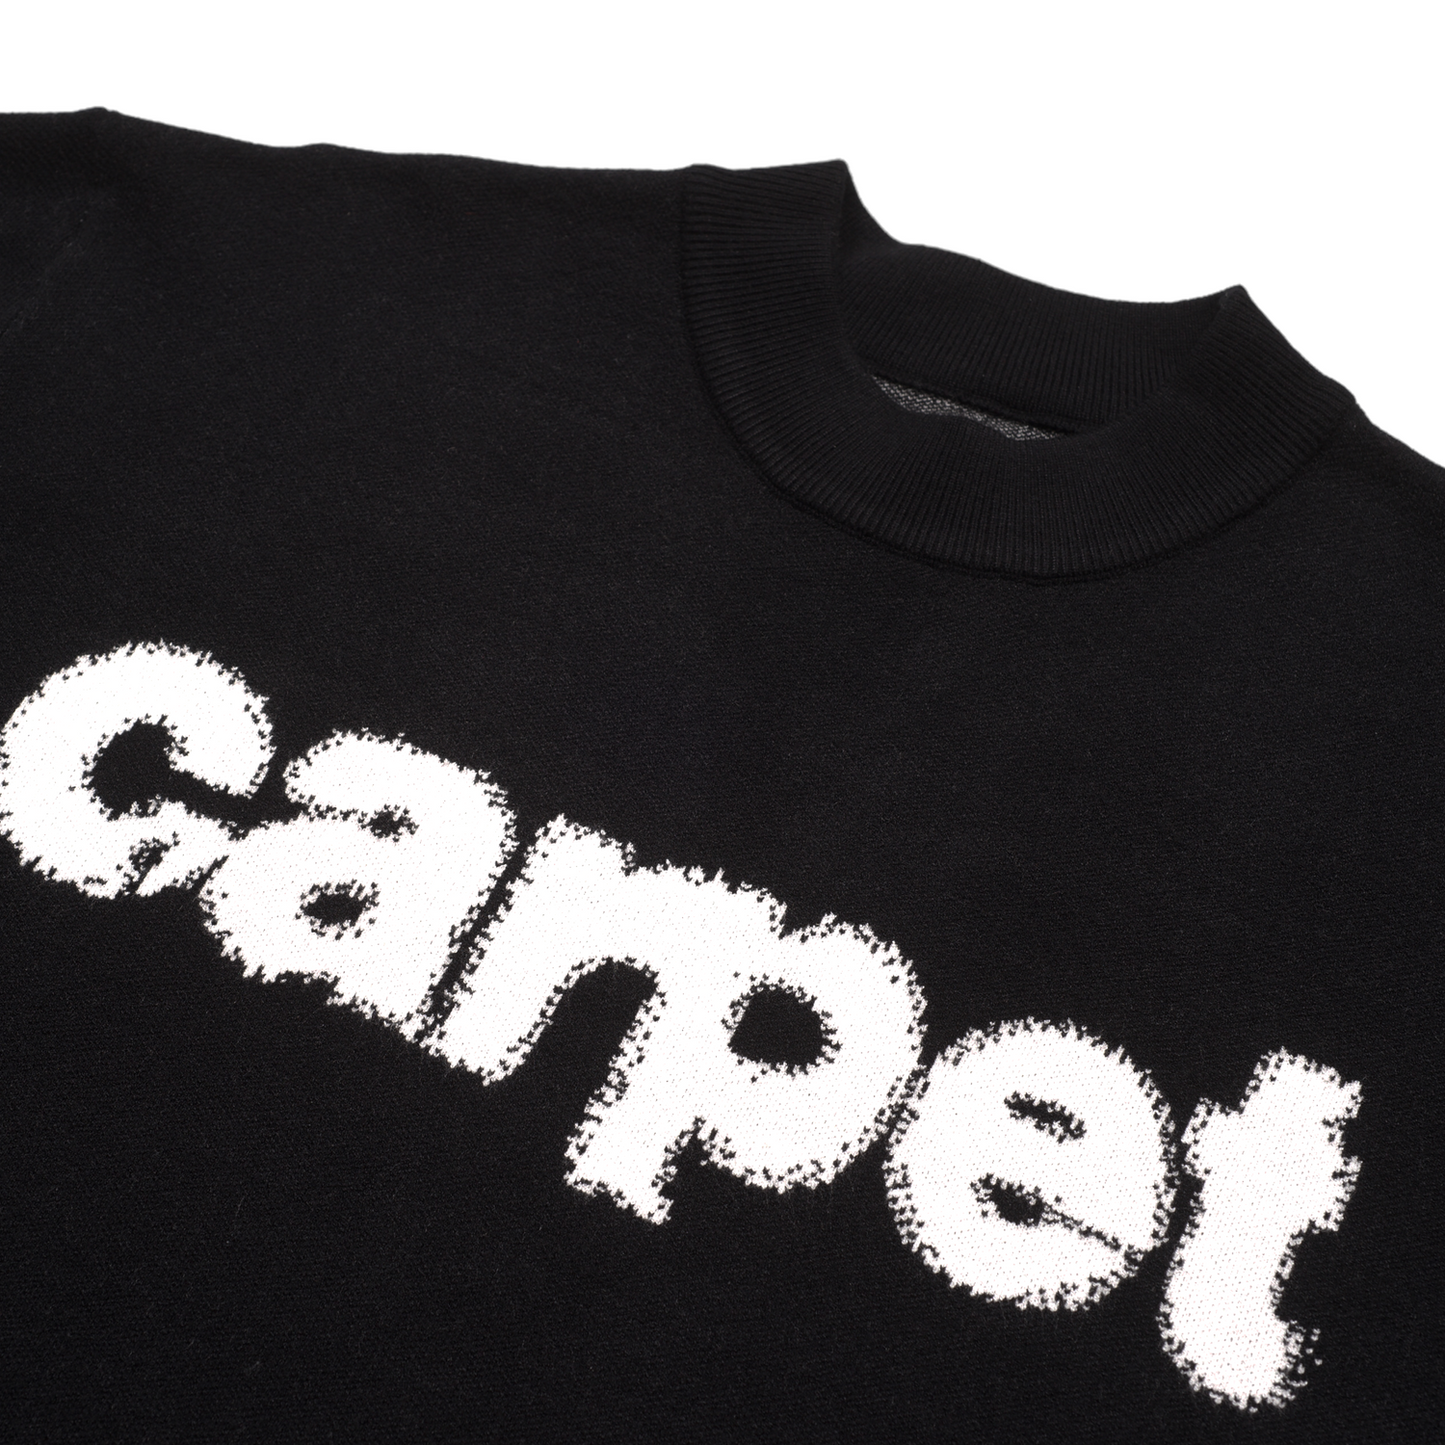 Carpet Co Woven Sweater Black